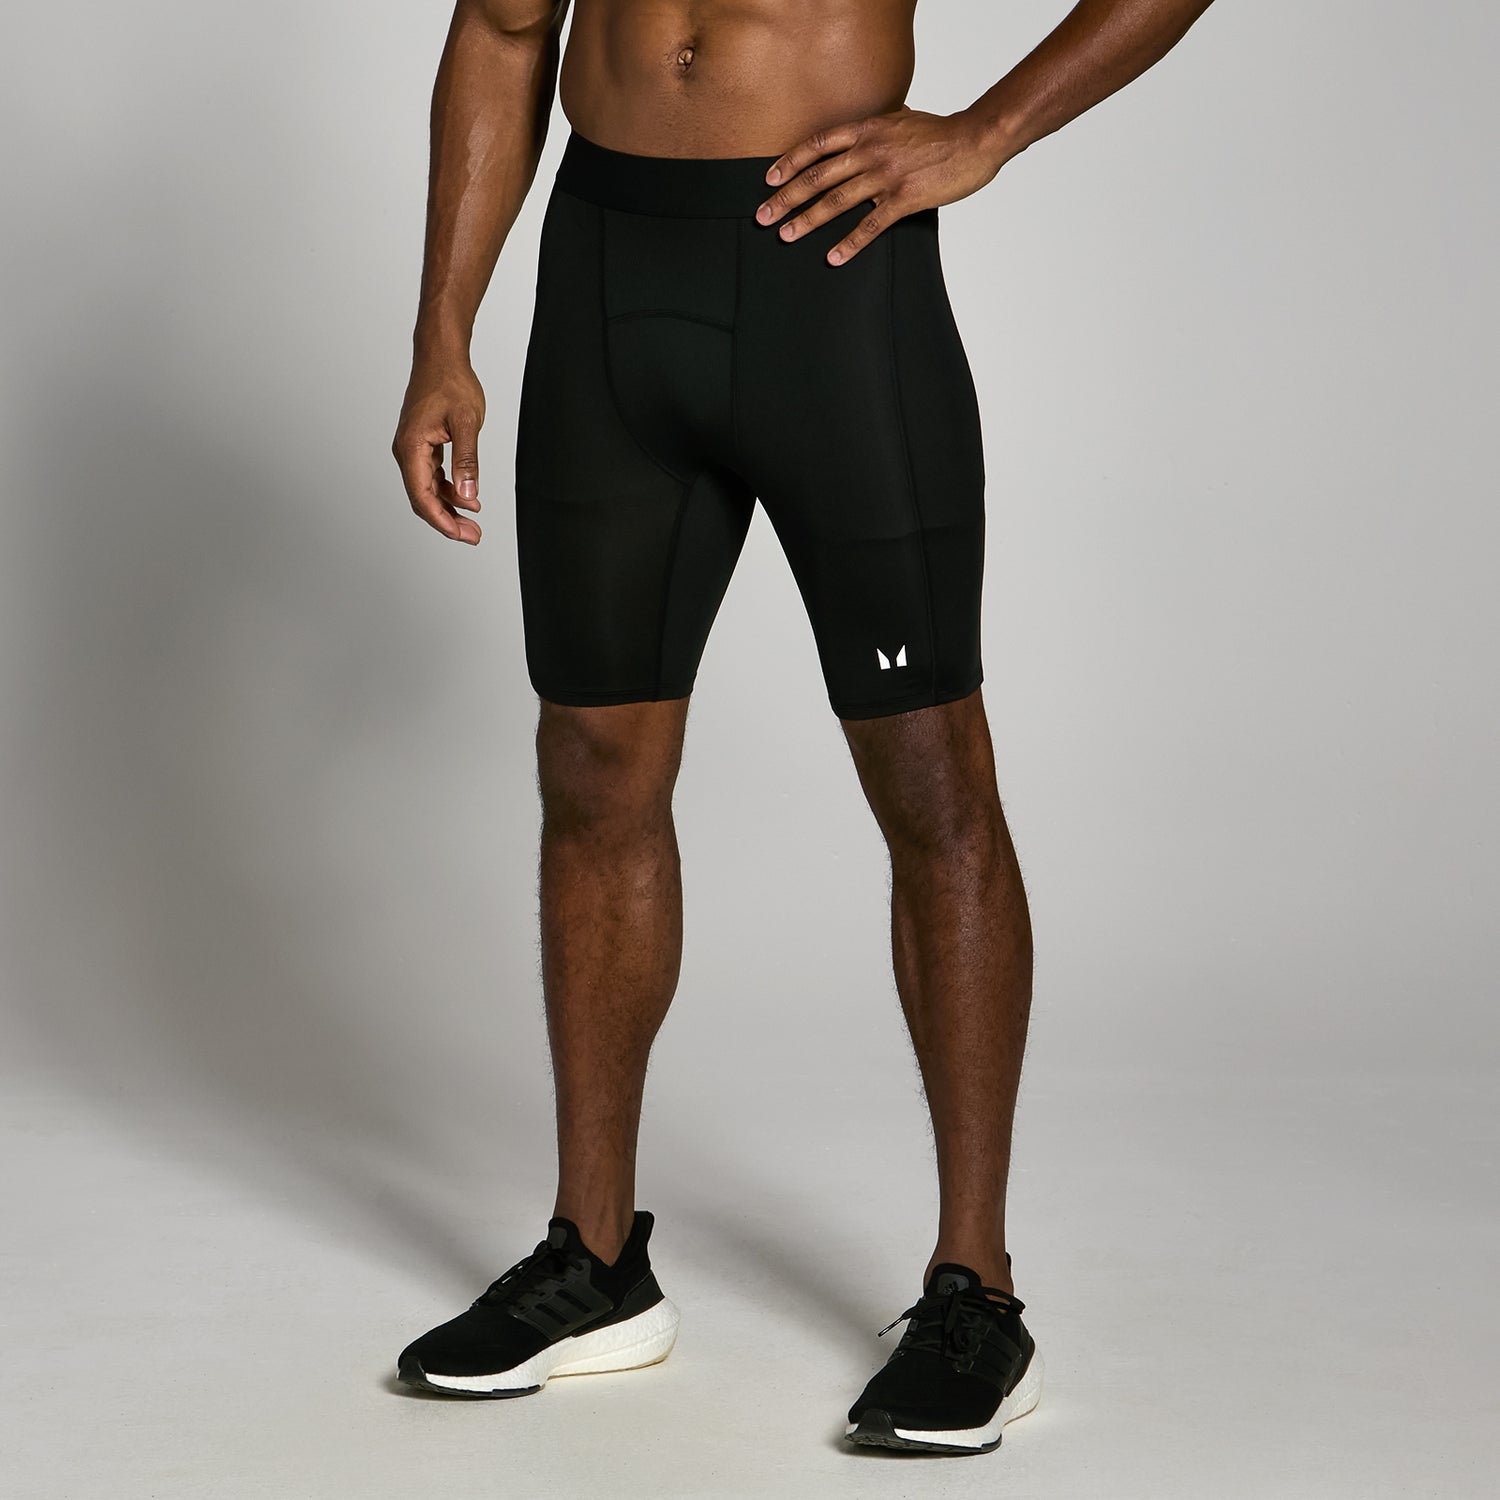 MP Men's Training Base Layer Shorts – Black - S